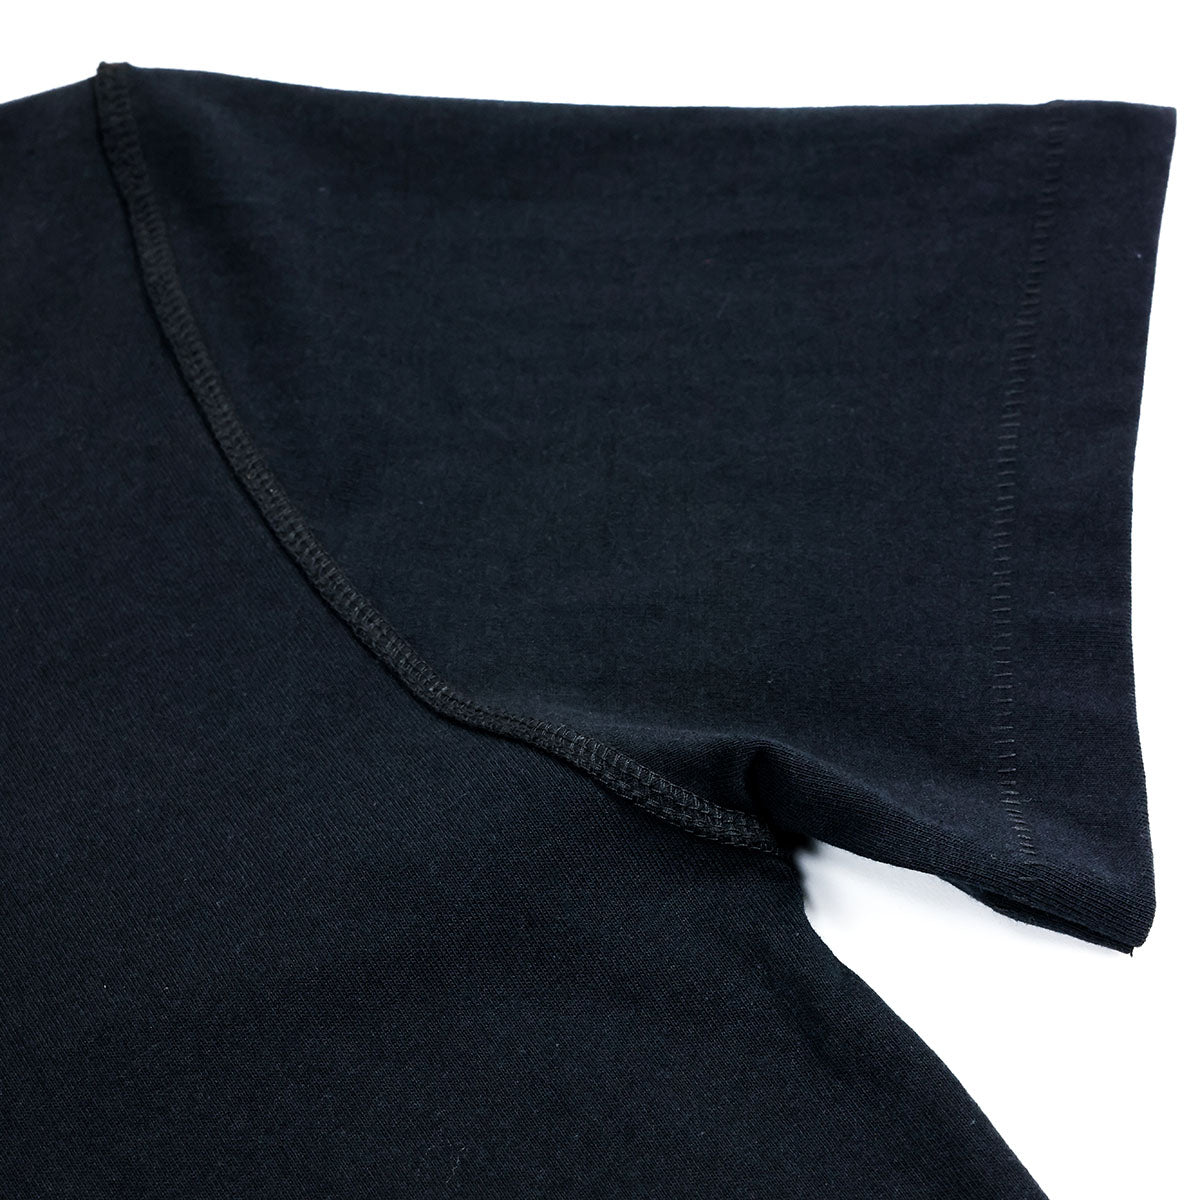 Marathon Ultra Oversized T-Shirt - Black/Black - Stitching